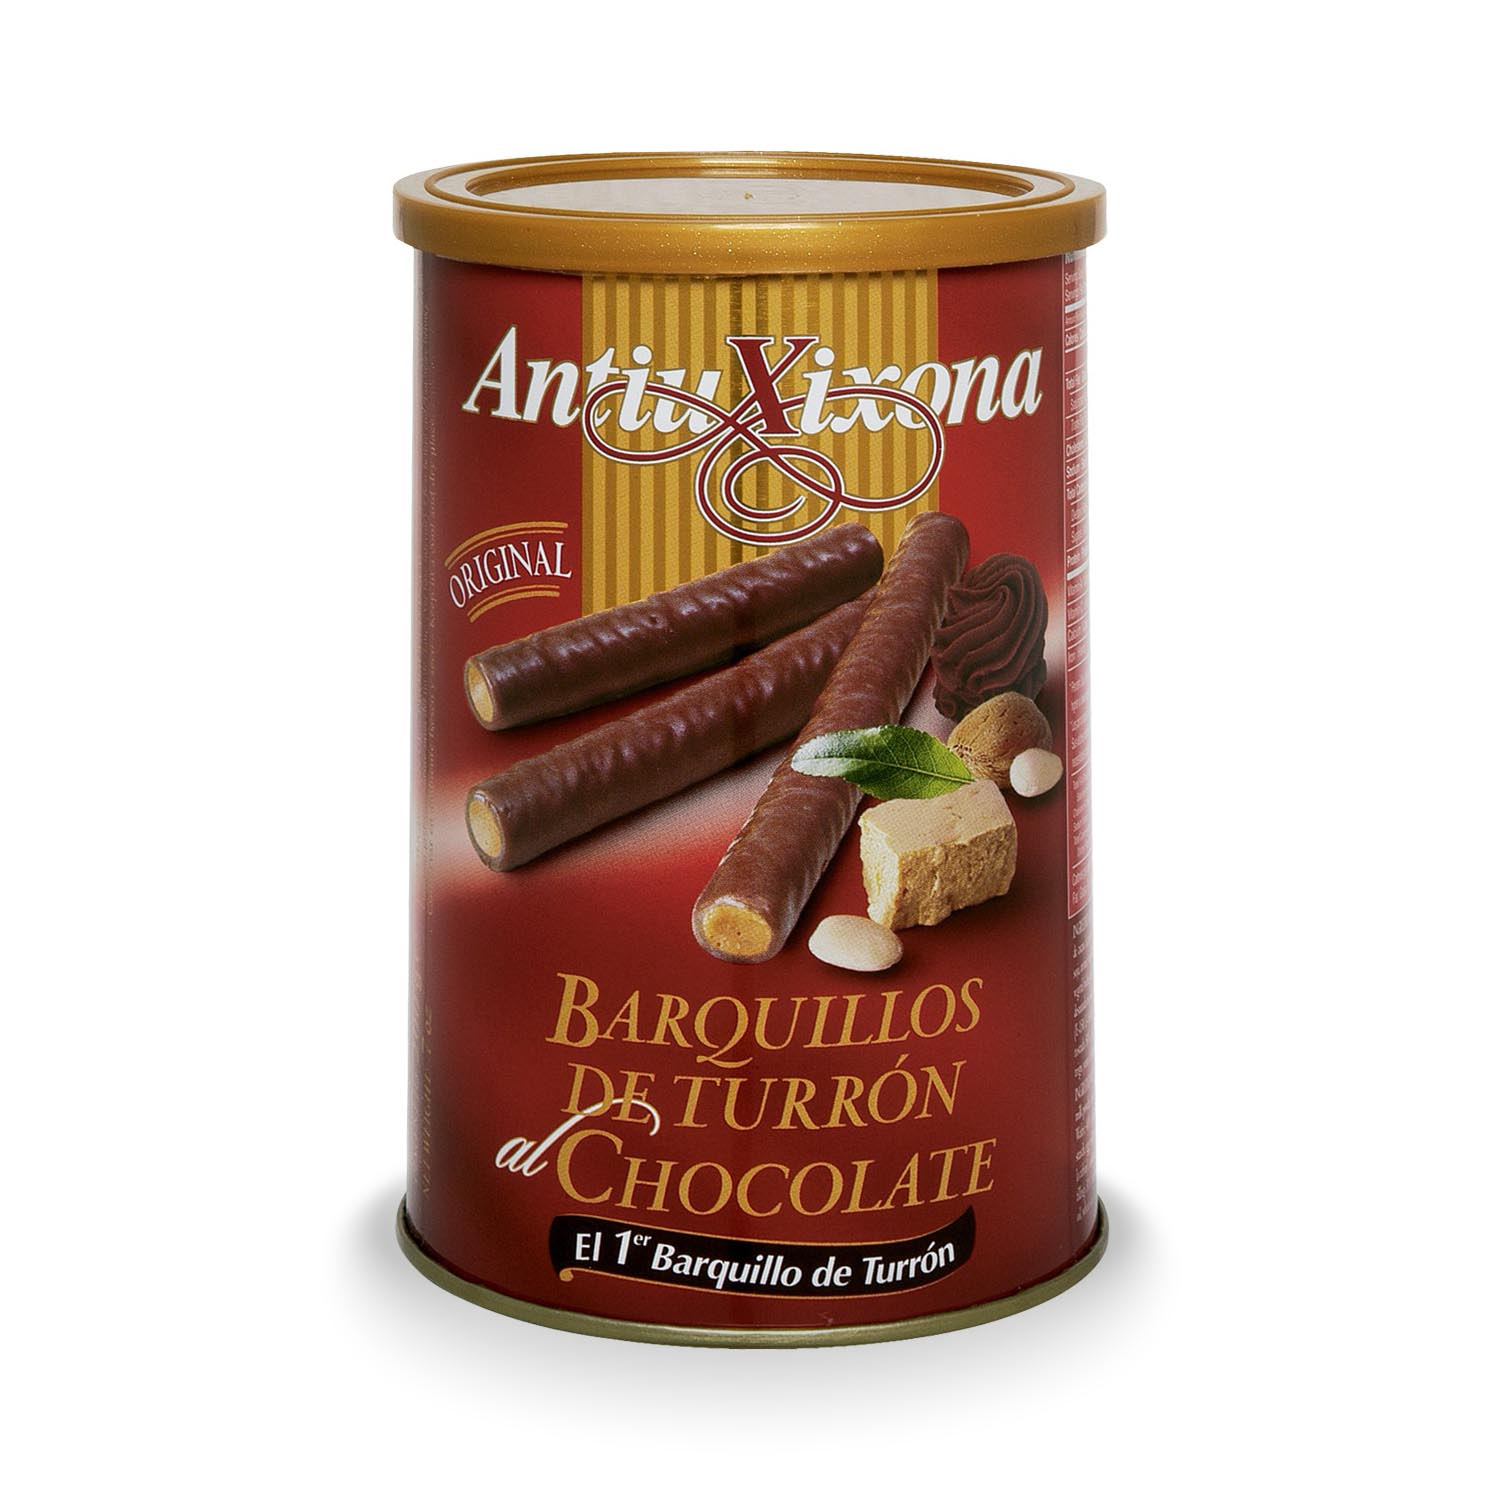 »AntiuXixona« Turrón-Waffelsticks mit Schokolade